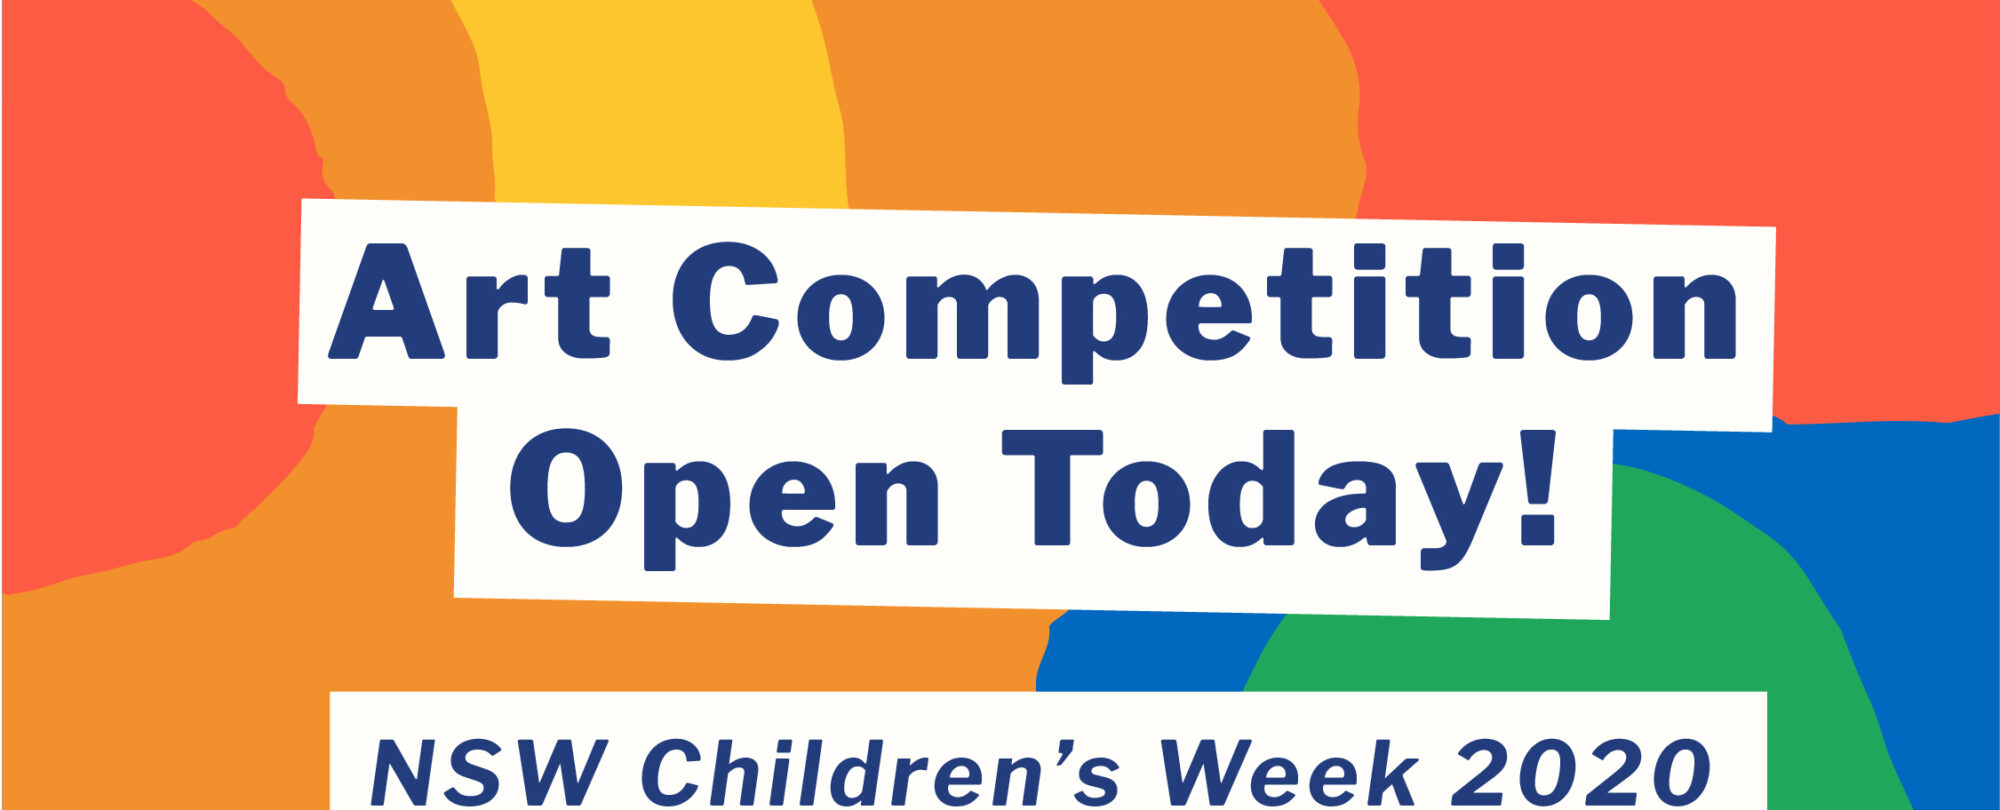 NSW Children’s Week Competition